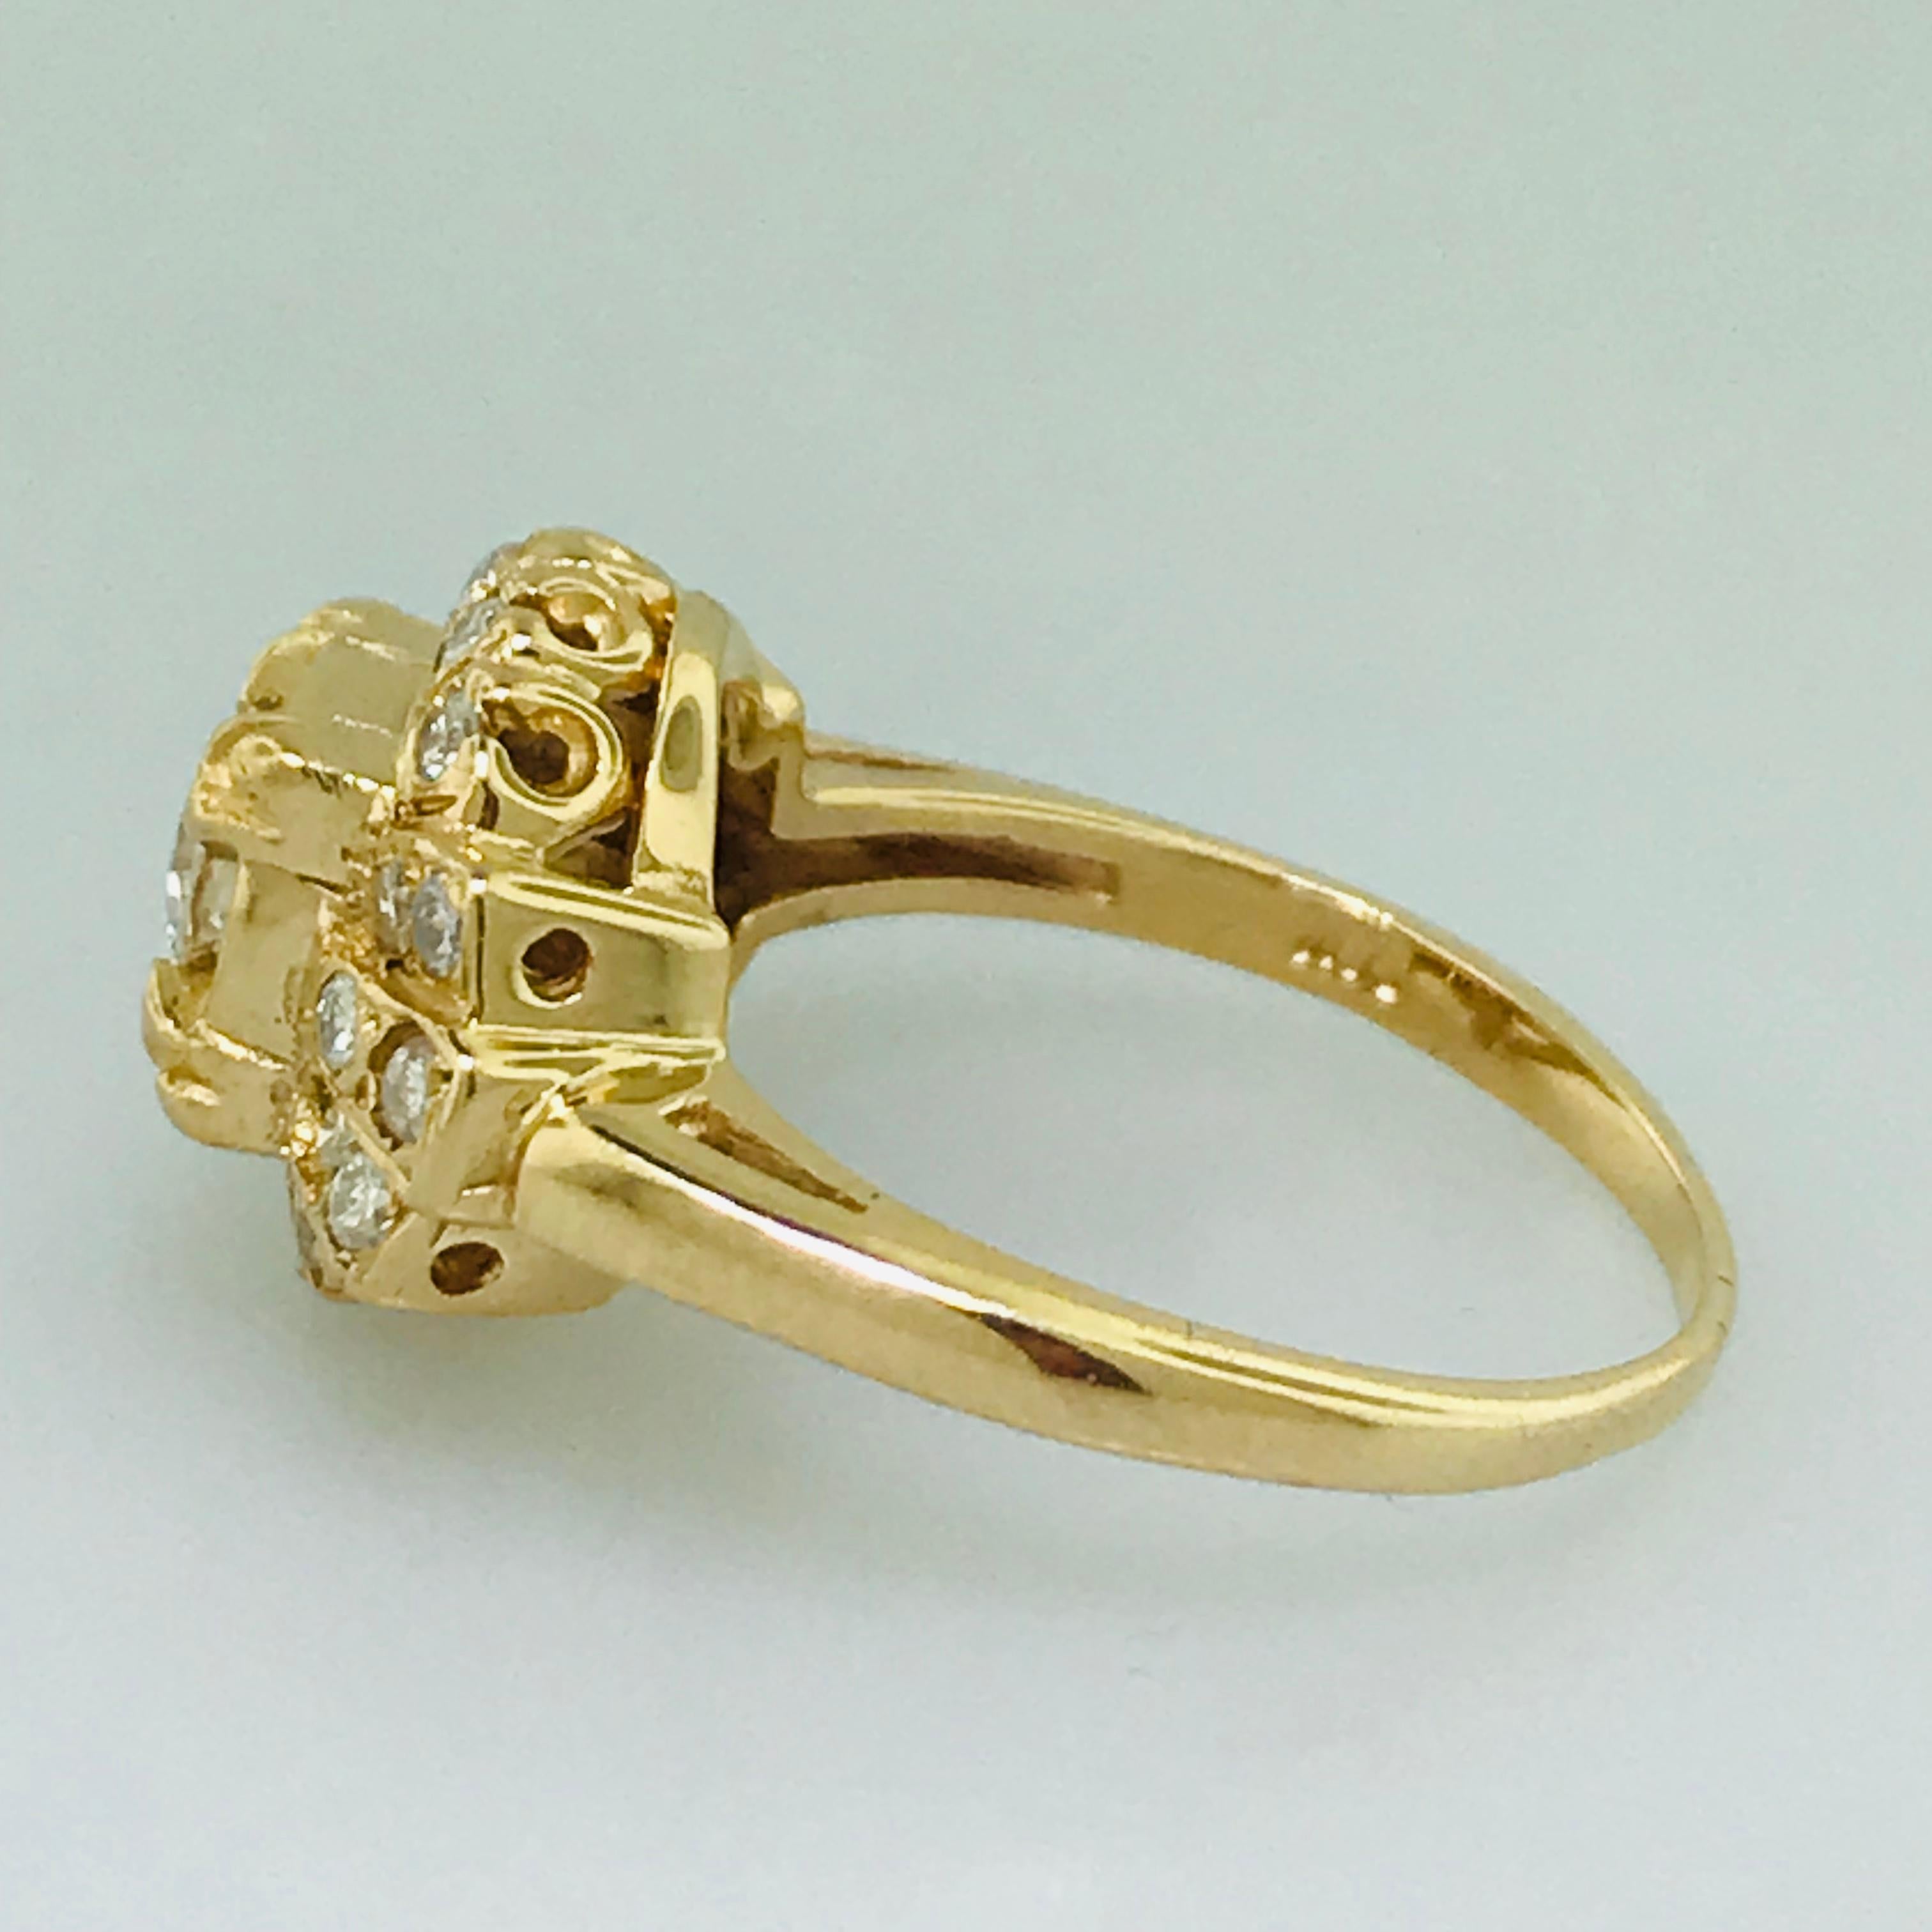 Romantic Vintage circa 1935 .50 Carat Diamond Engagement Ring in 14 Karat Yellow Gold For Sale